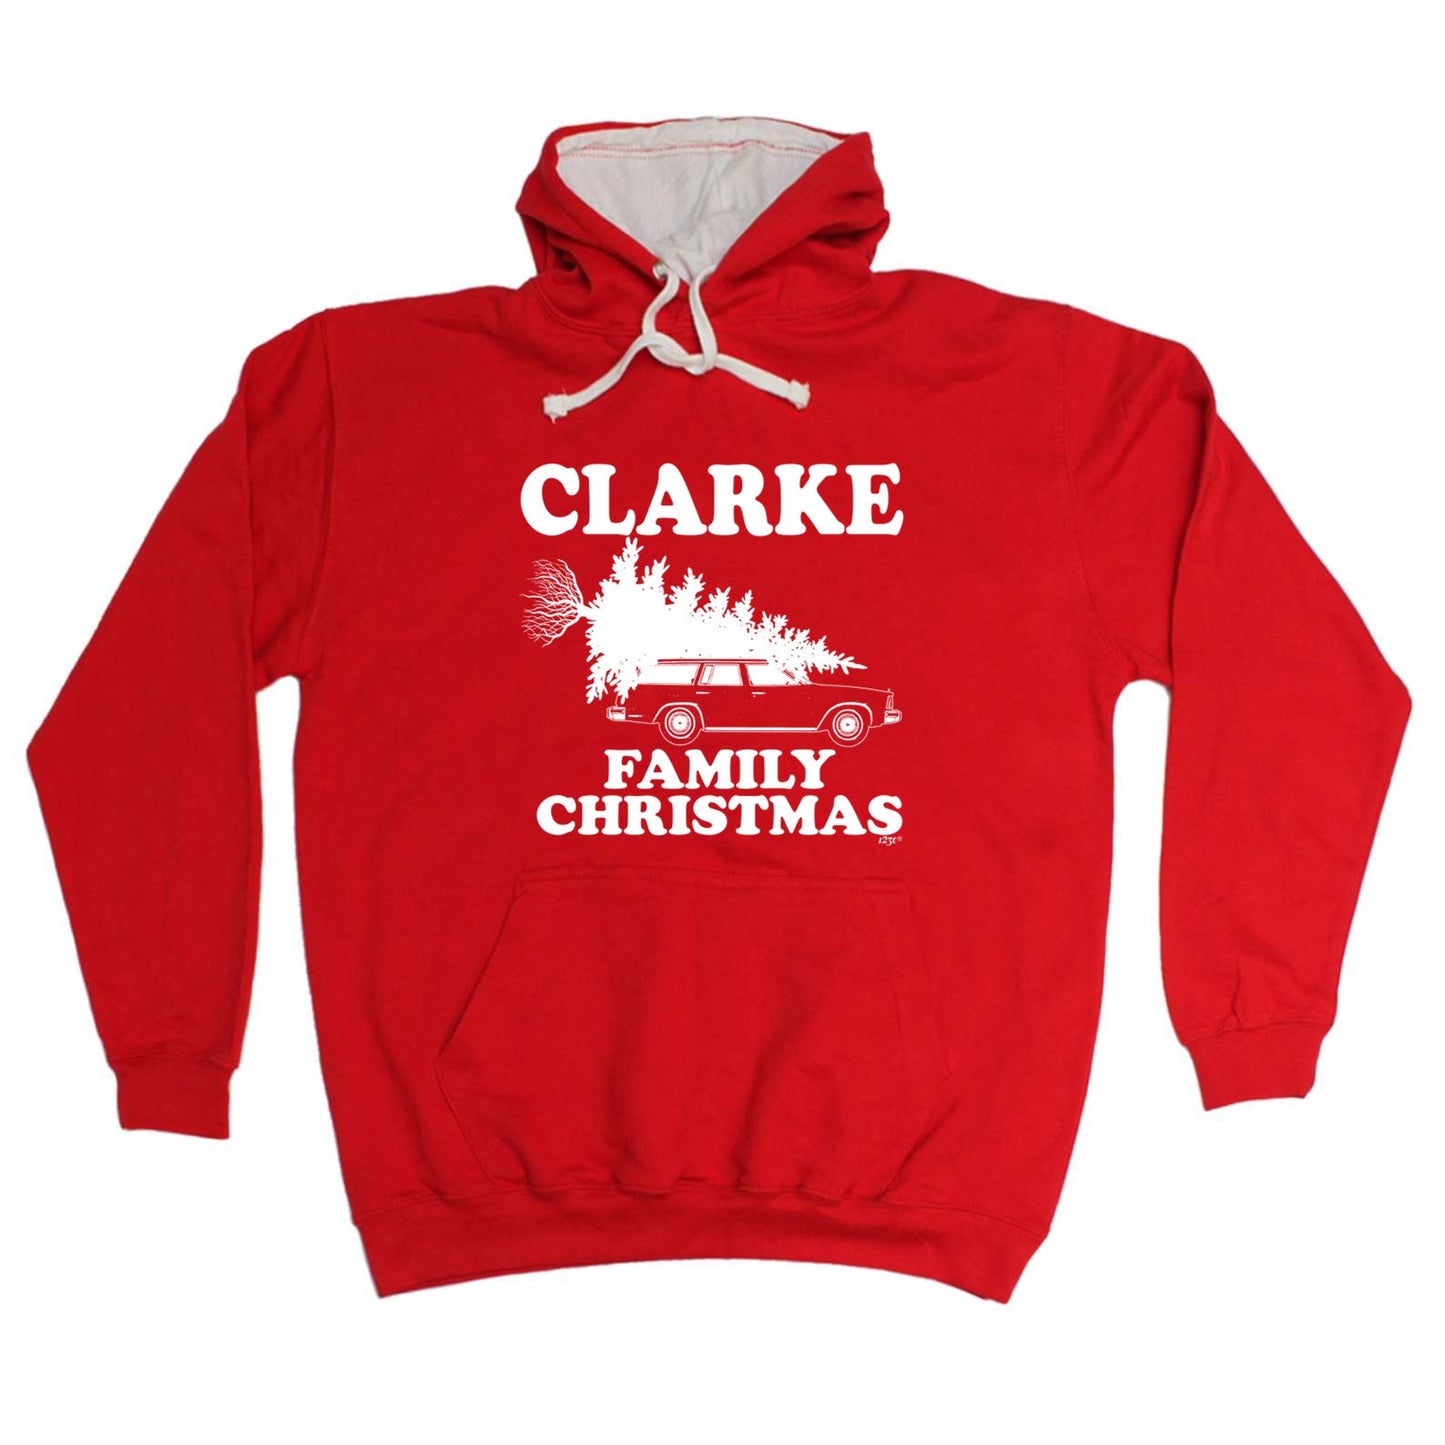 Family Christmas Clarke - Xmas Novelty Hoodies Hoodie